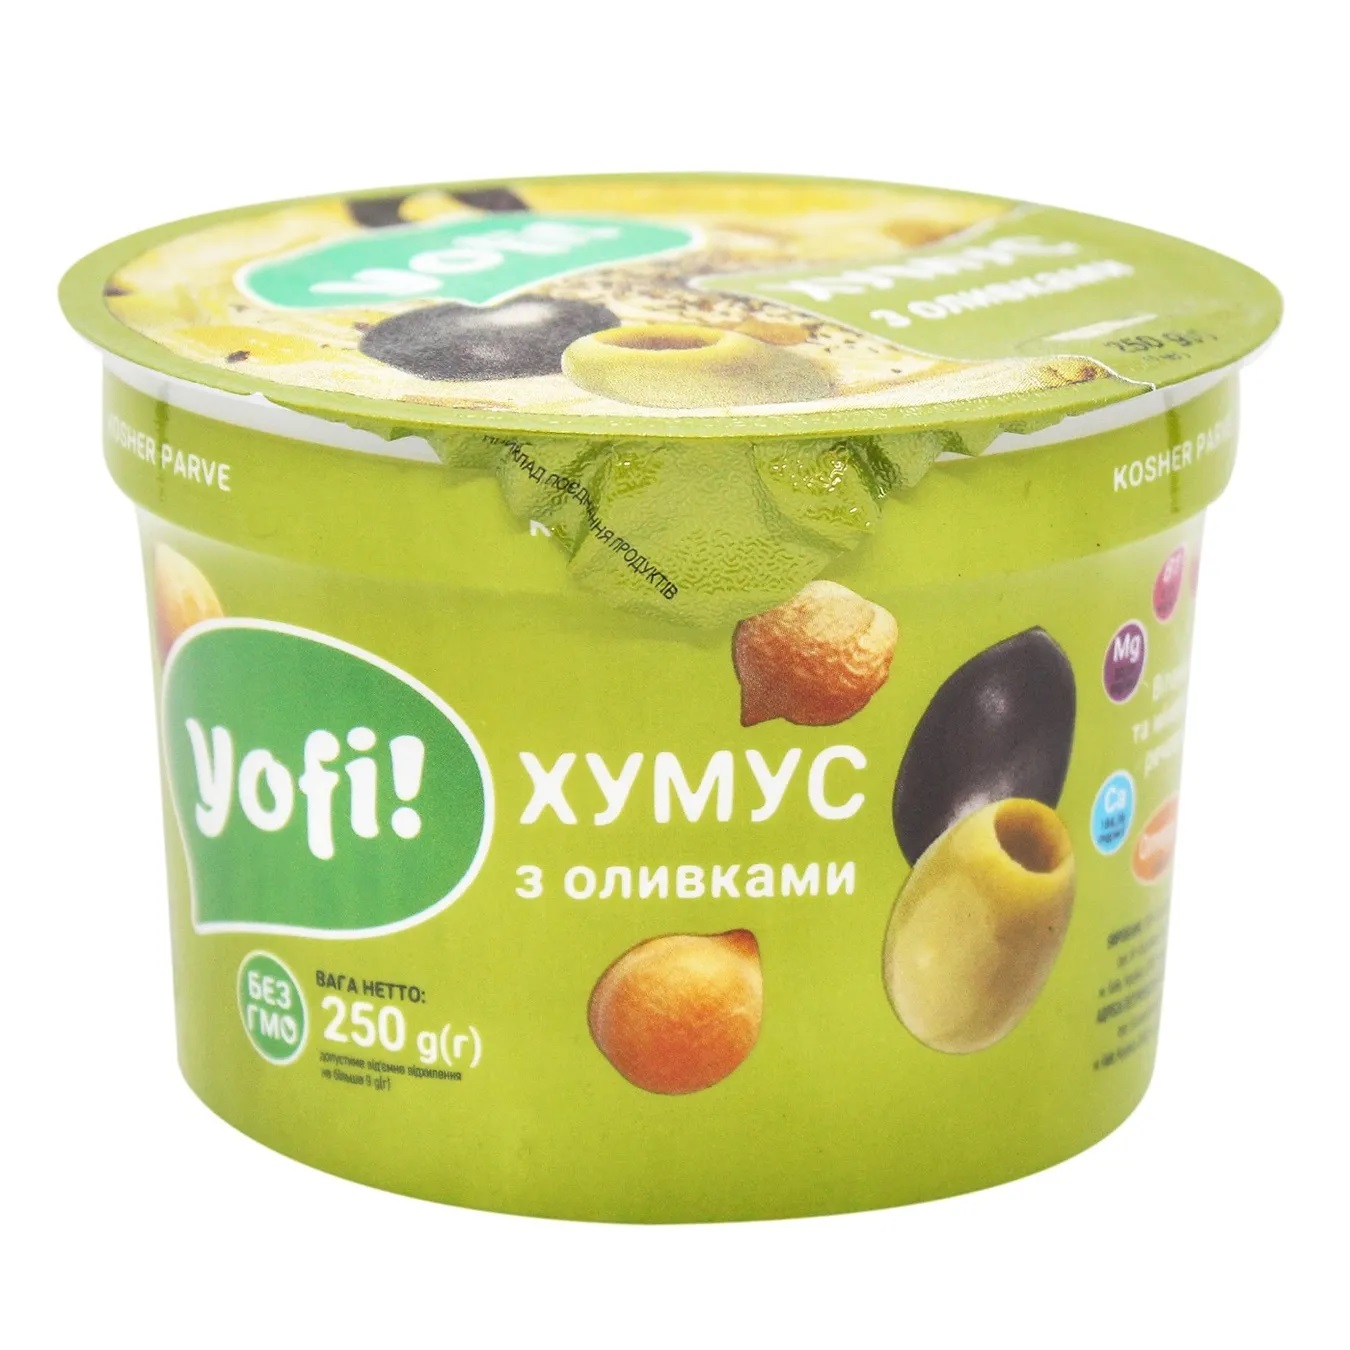 Yofi! Hummus with Olives 250g